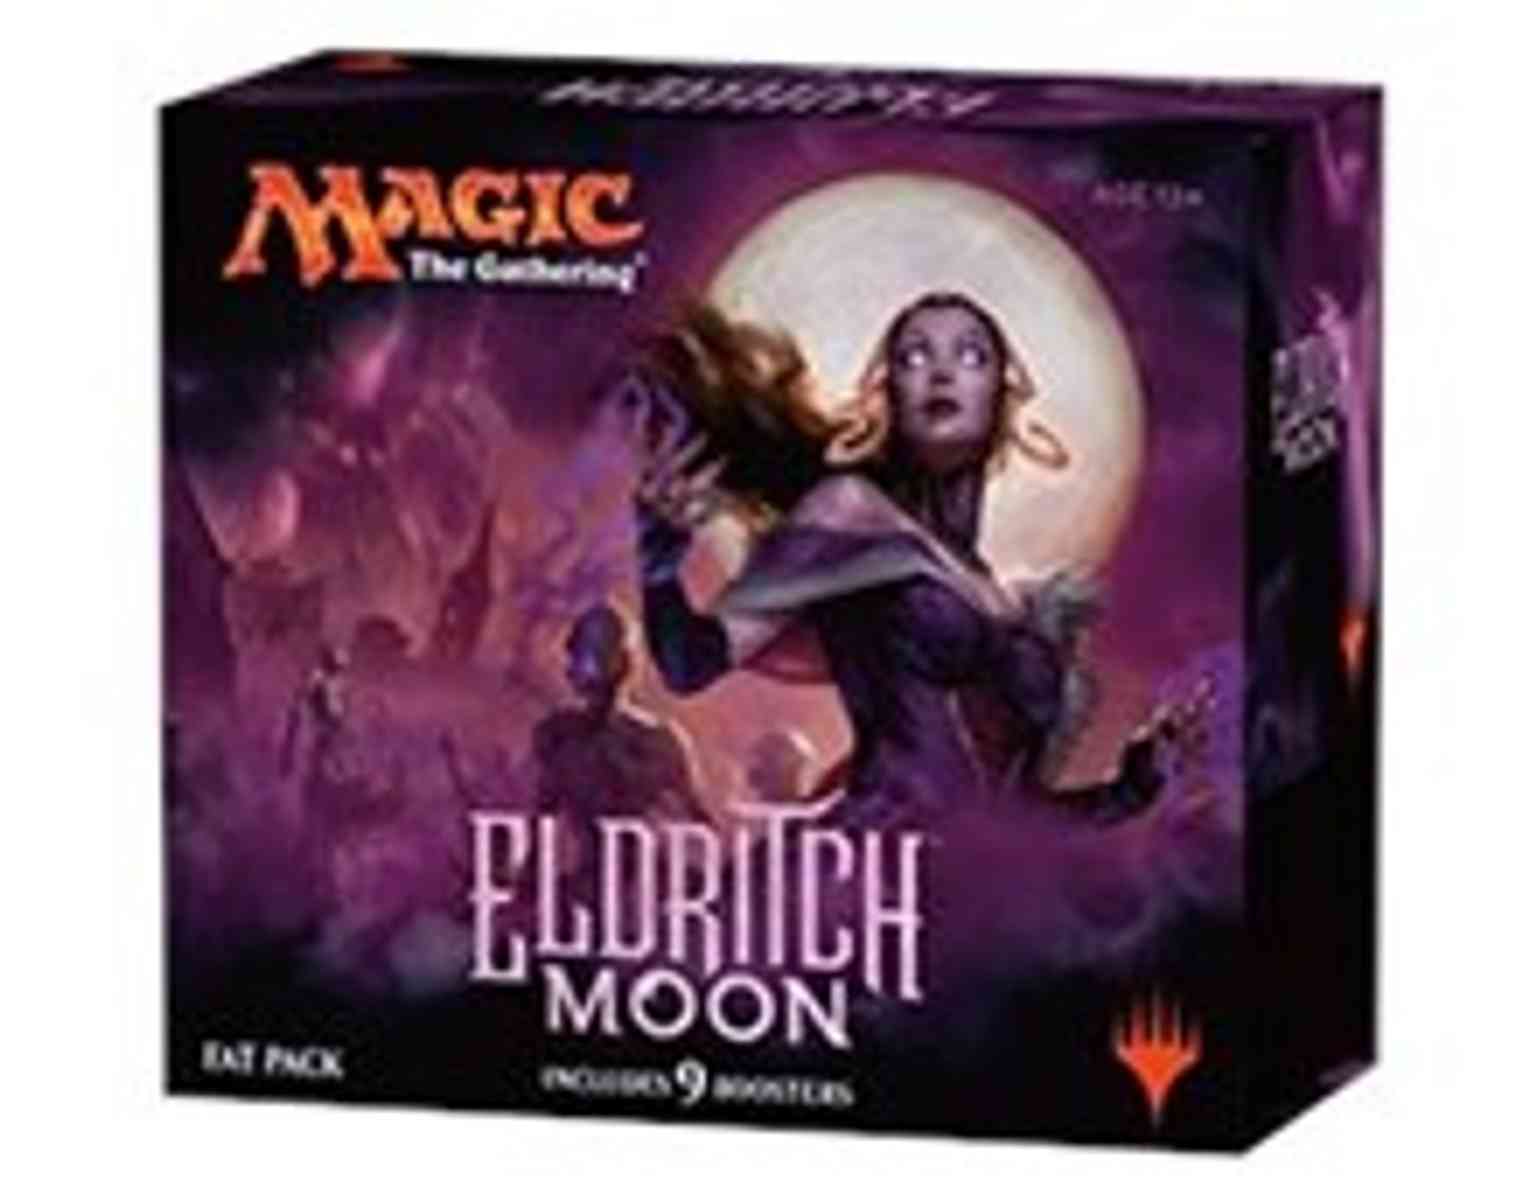 Eldritch Moon Fat Pack magic card front